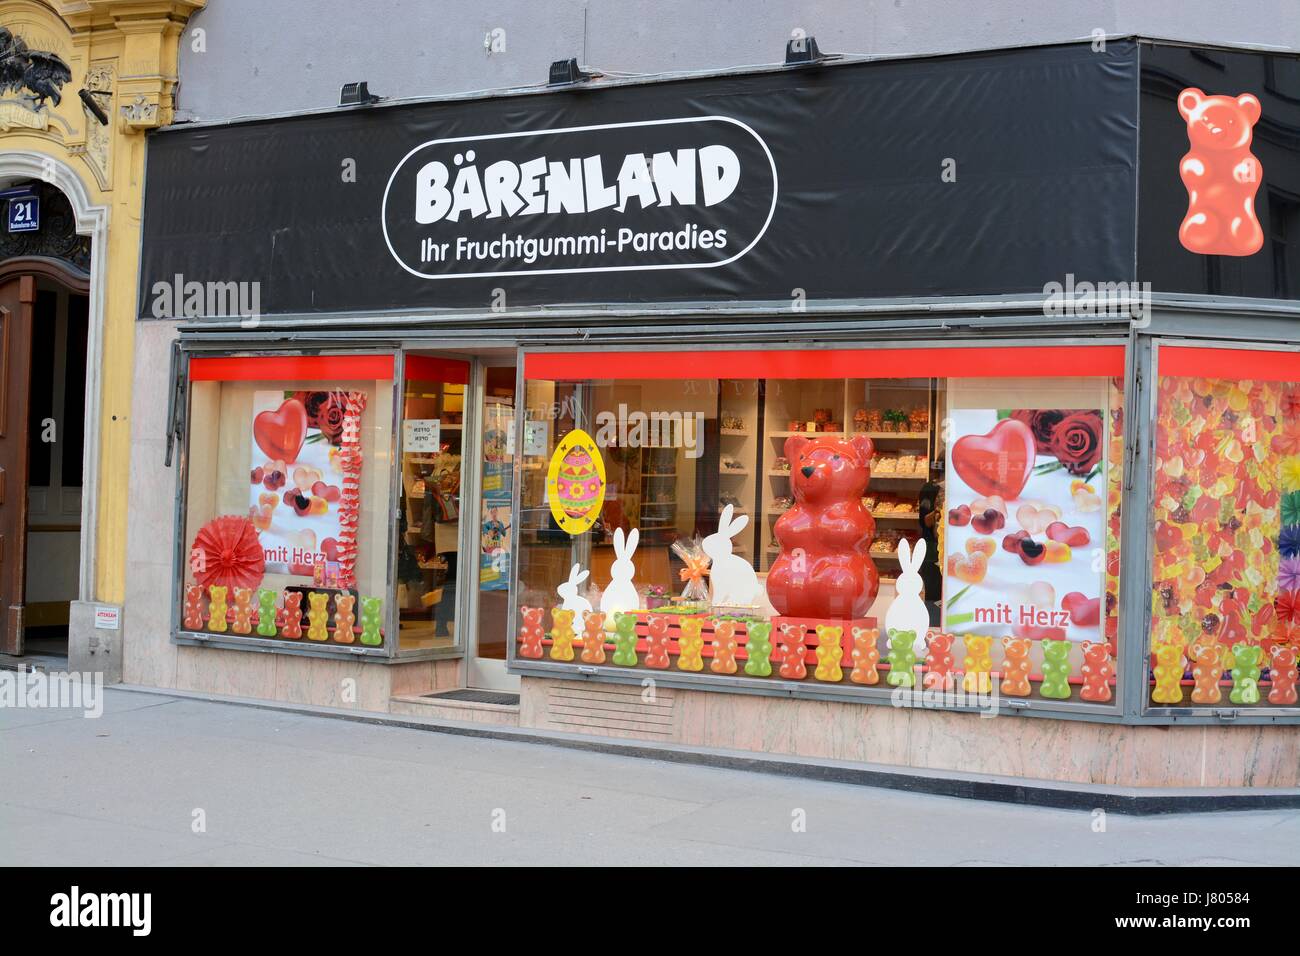 Barenland, Jelly baby shop, Vienna, Austria Stock Photo - Alamy